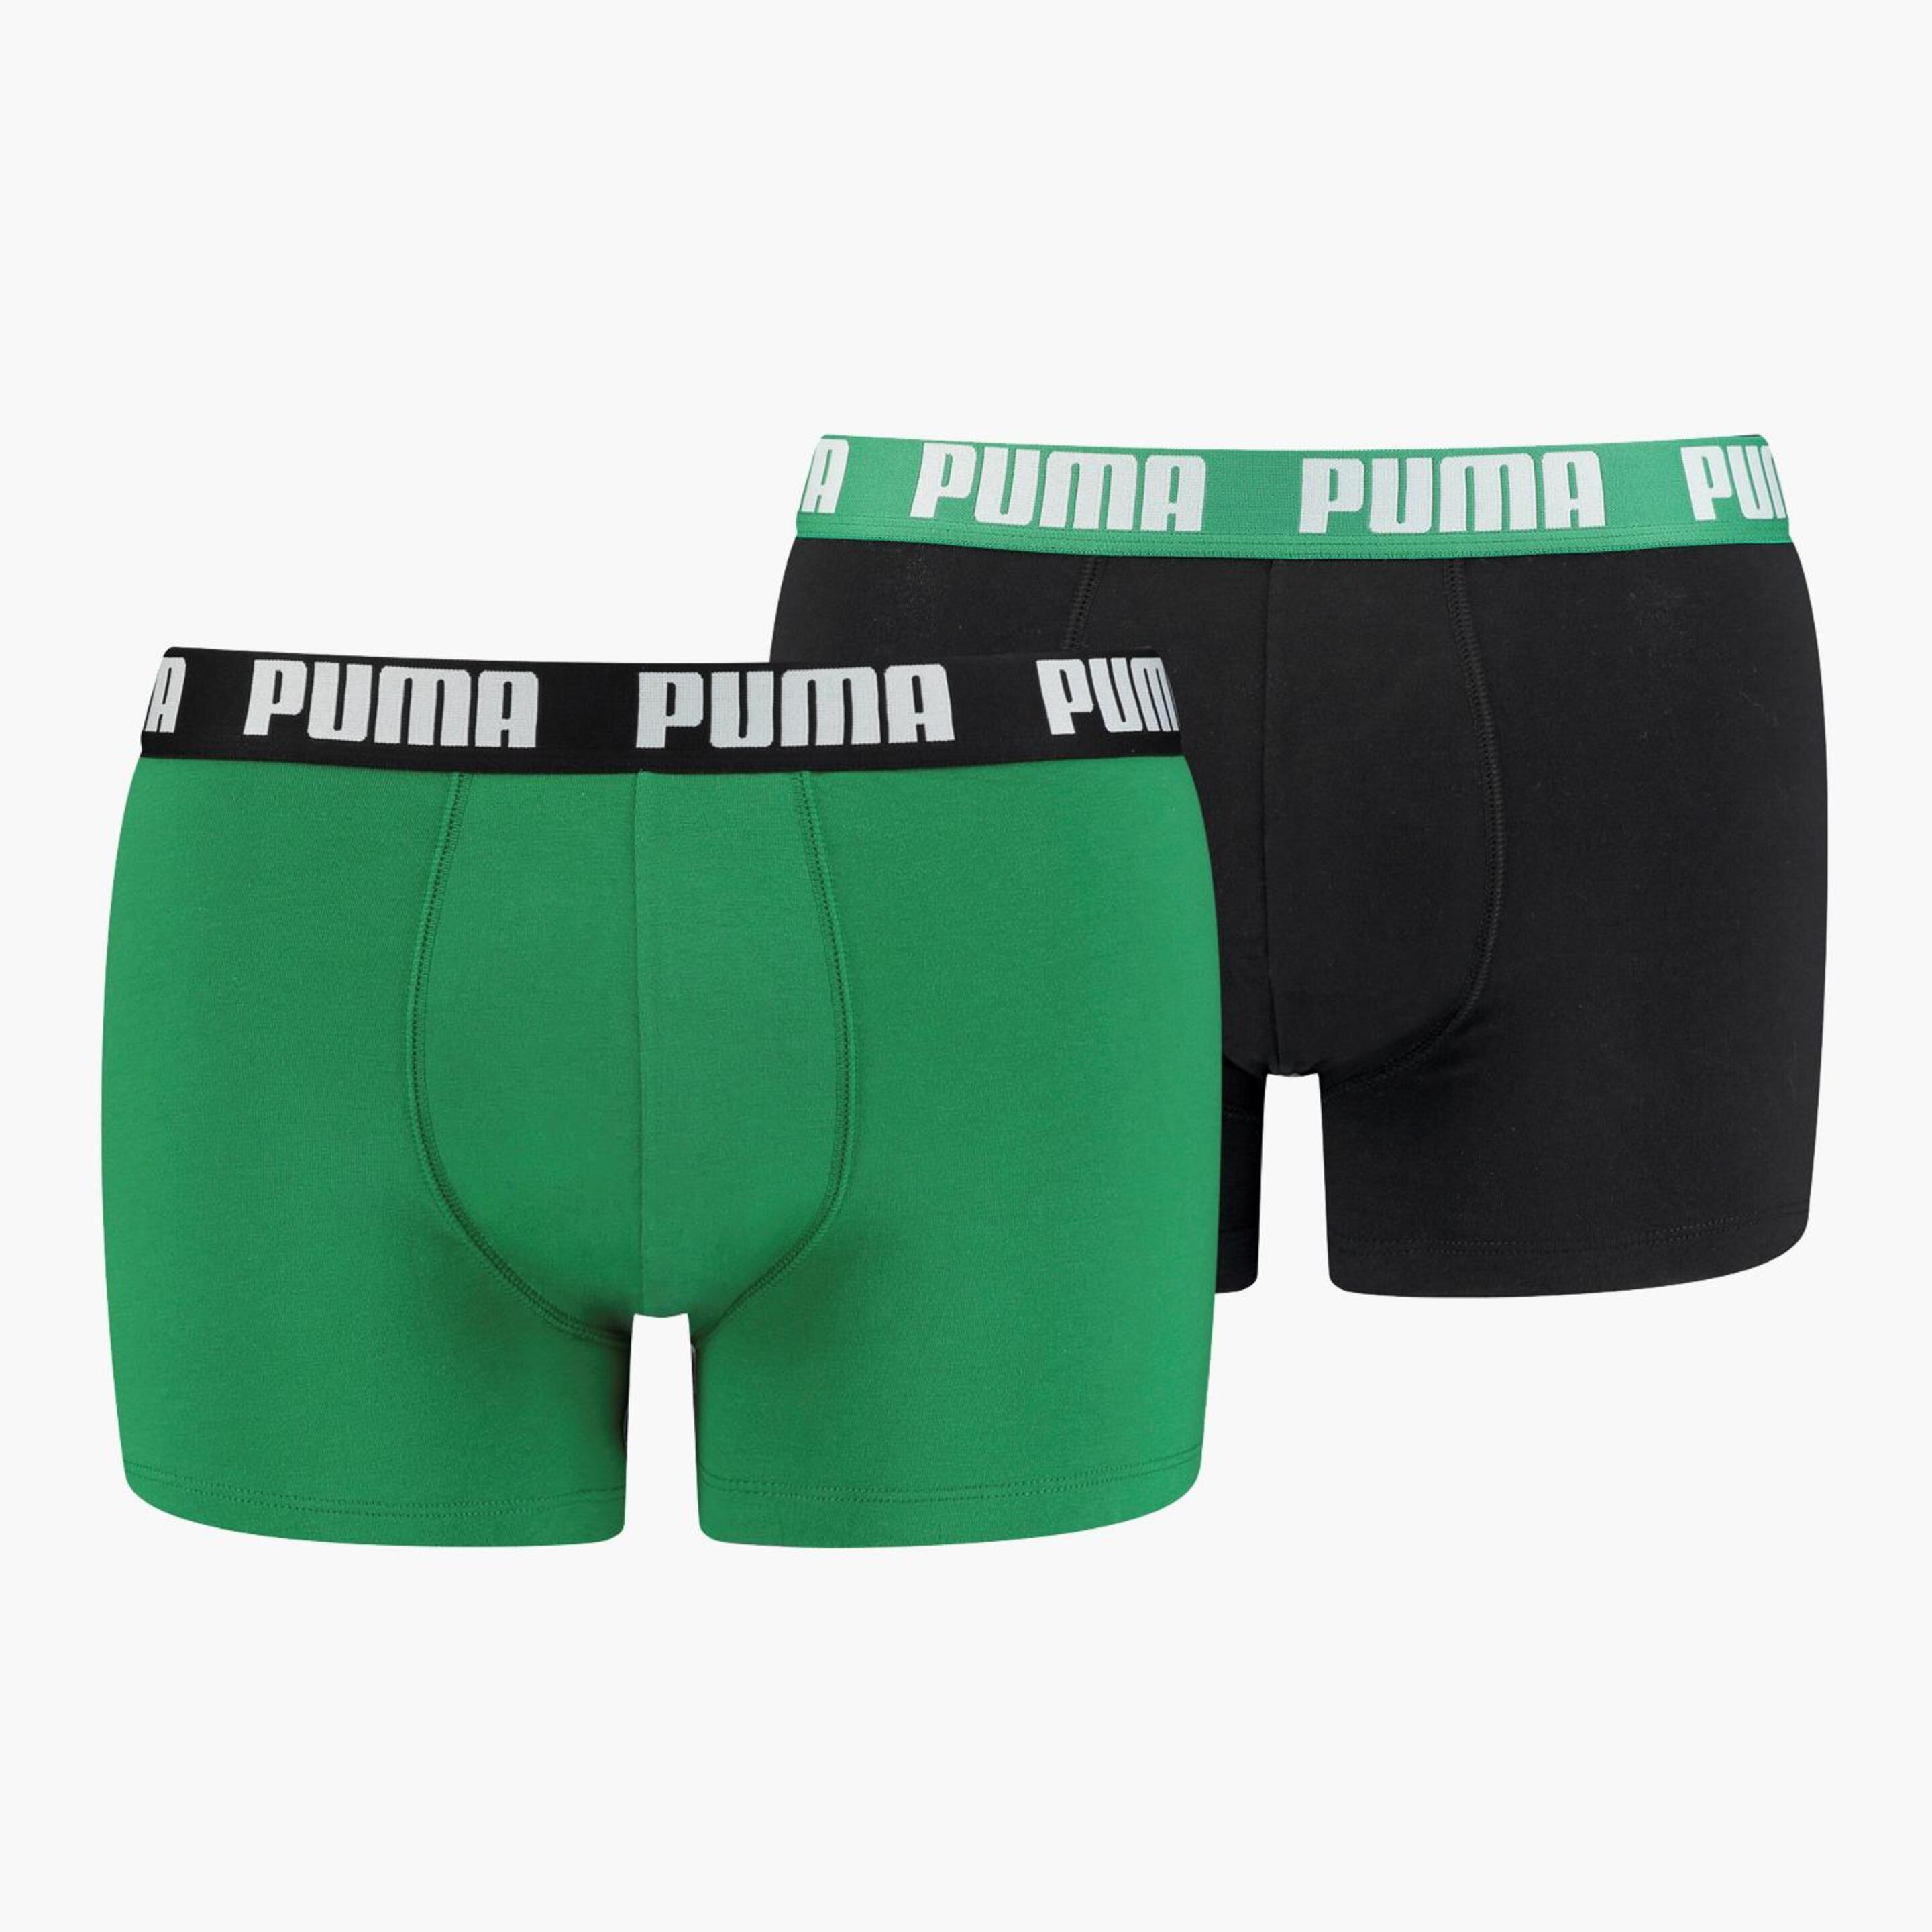 Boxers Puma Aop Pack 2